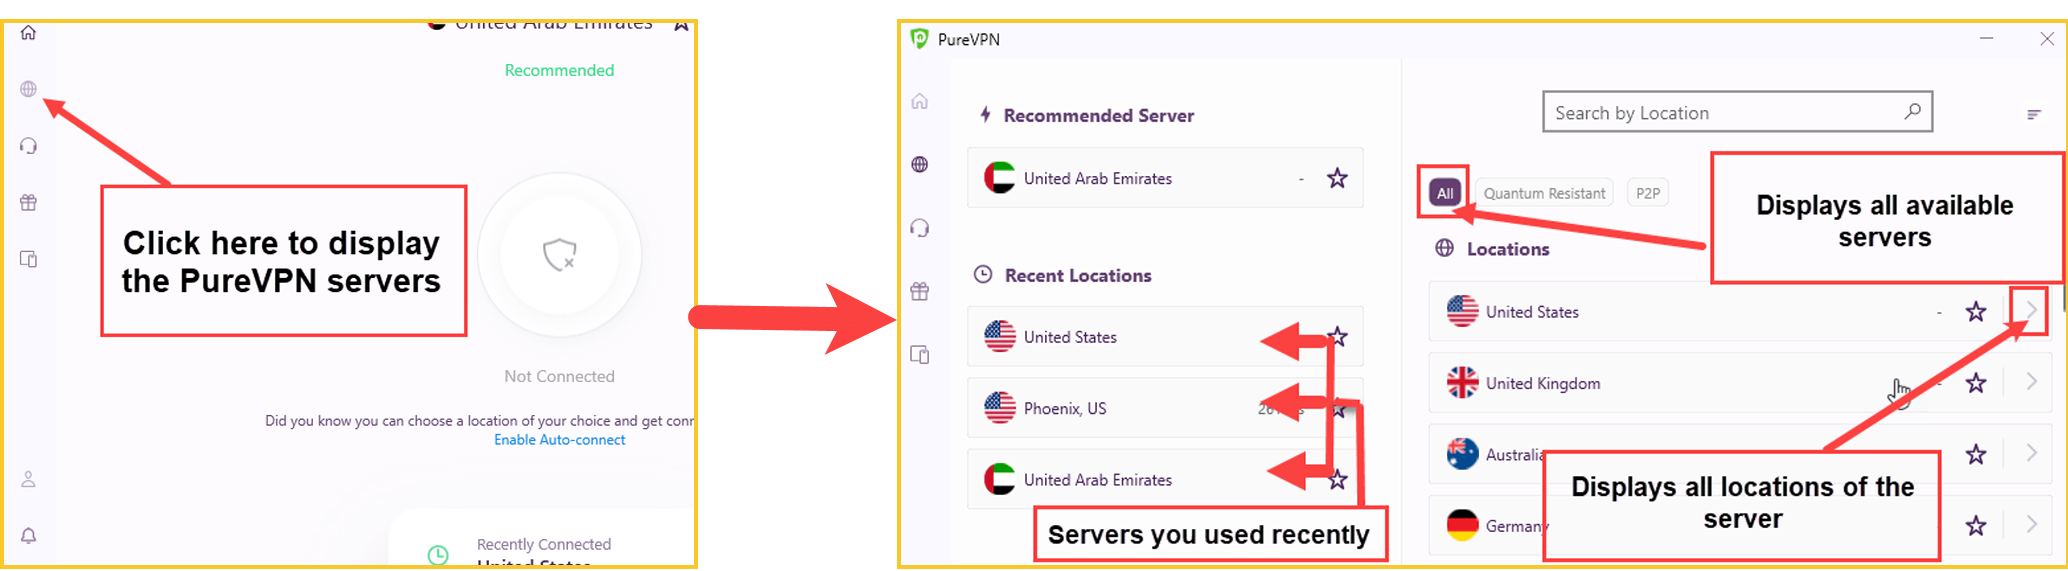 purevpn-server-locations-interface-in-Spain